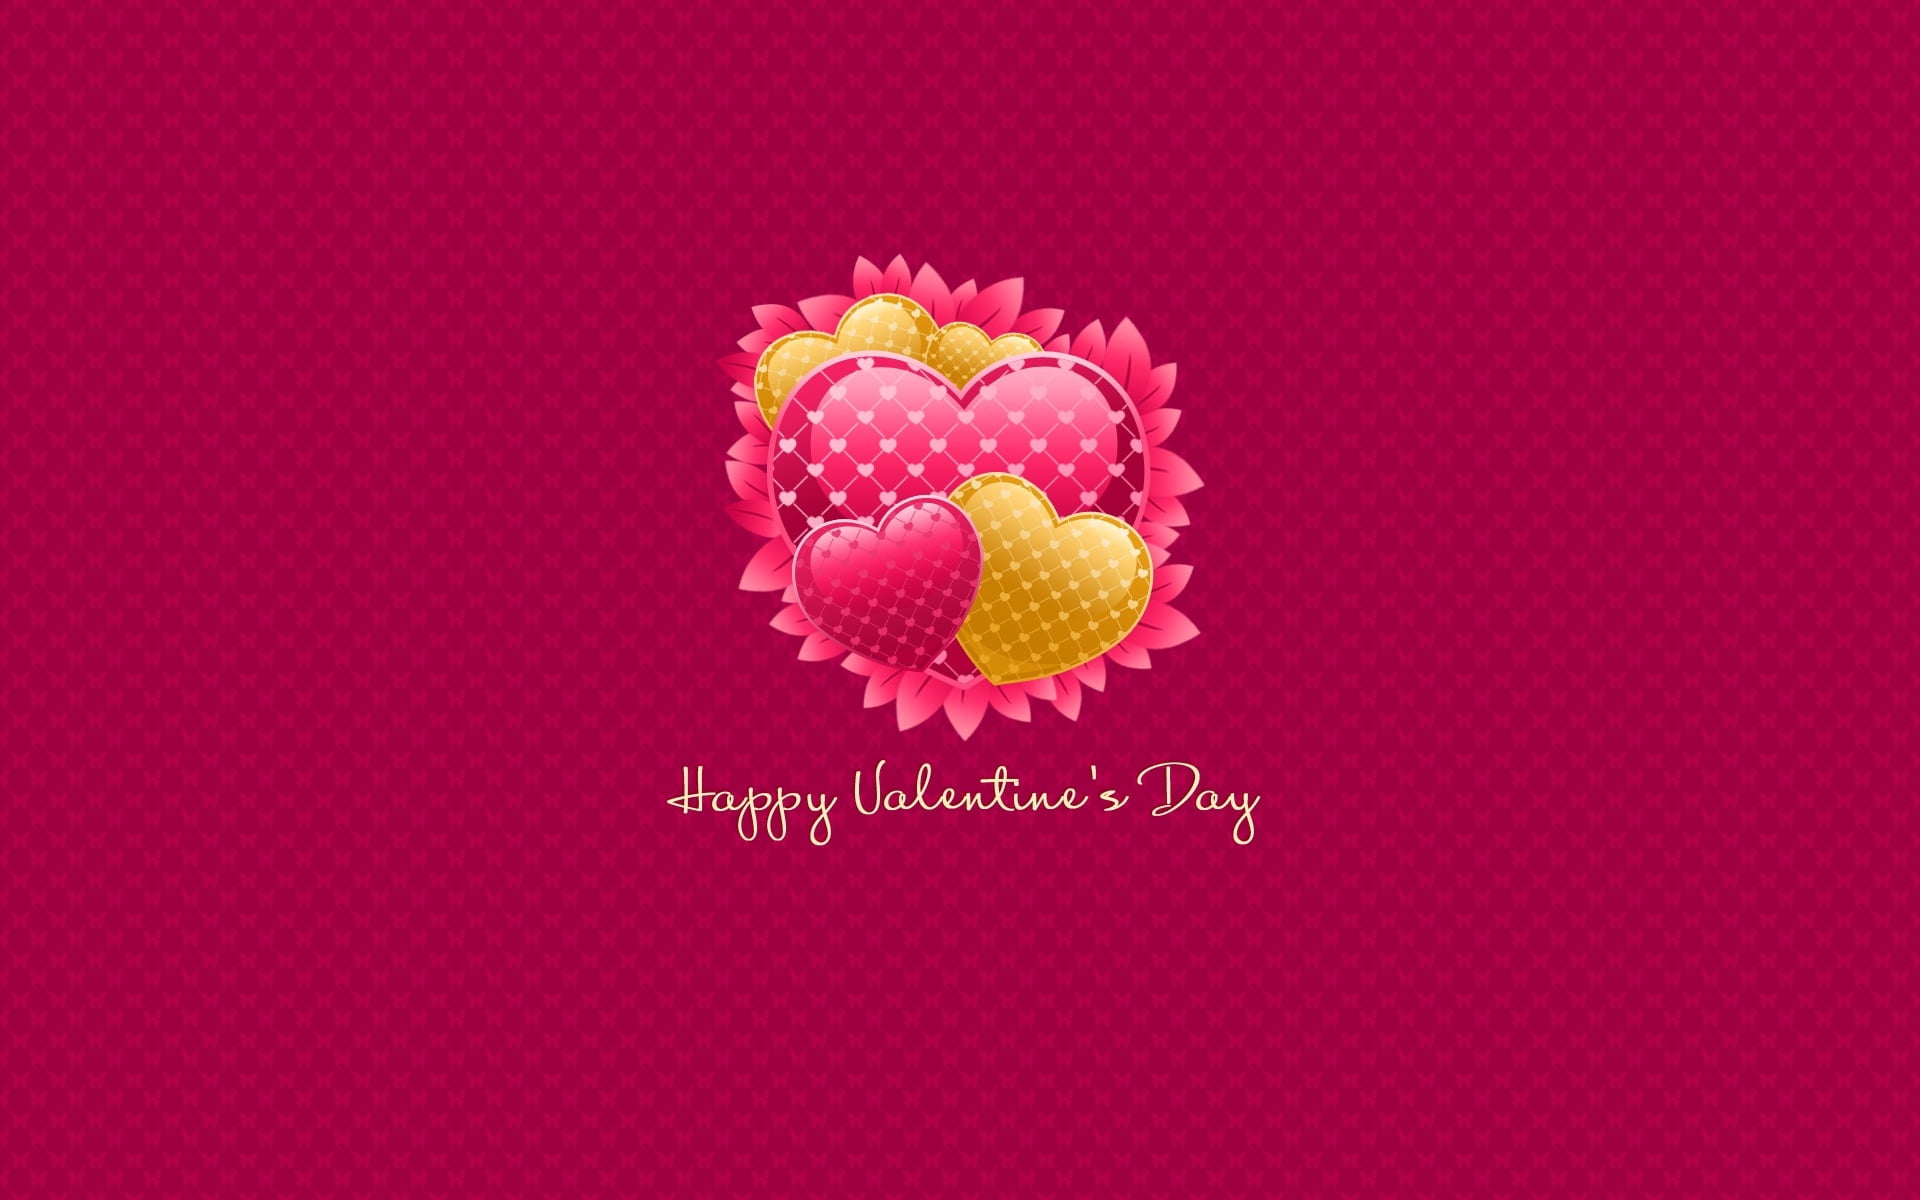 Happy Valentines Day wallpaper, inscription, congratulation, hearts